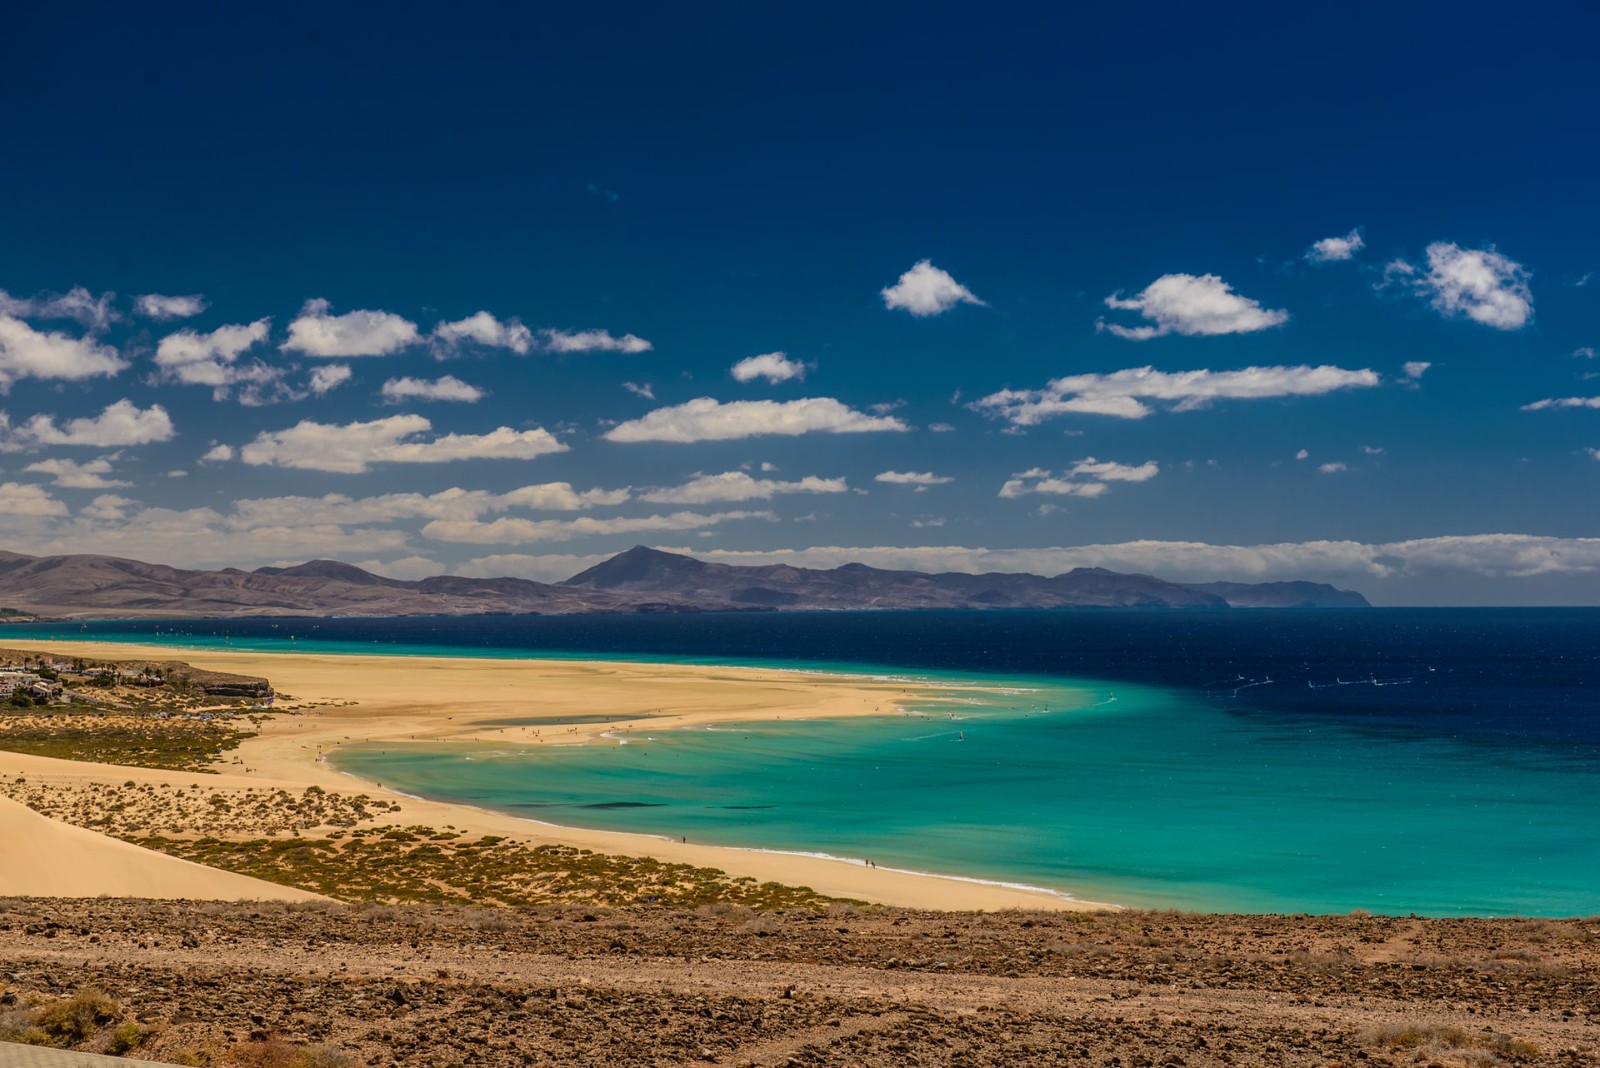 How to Spend 3 Days in Fuerteventura